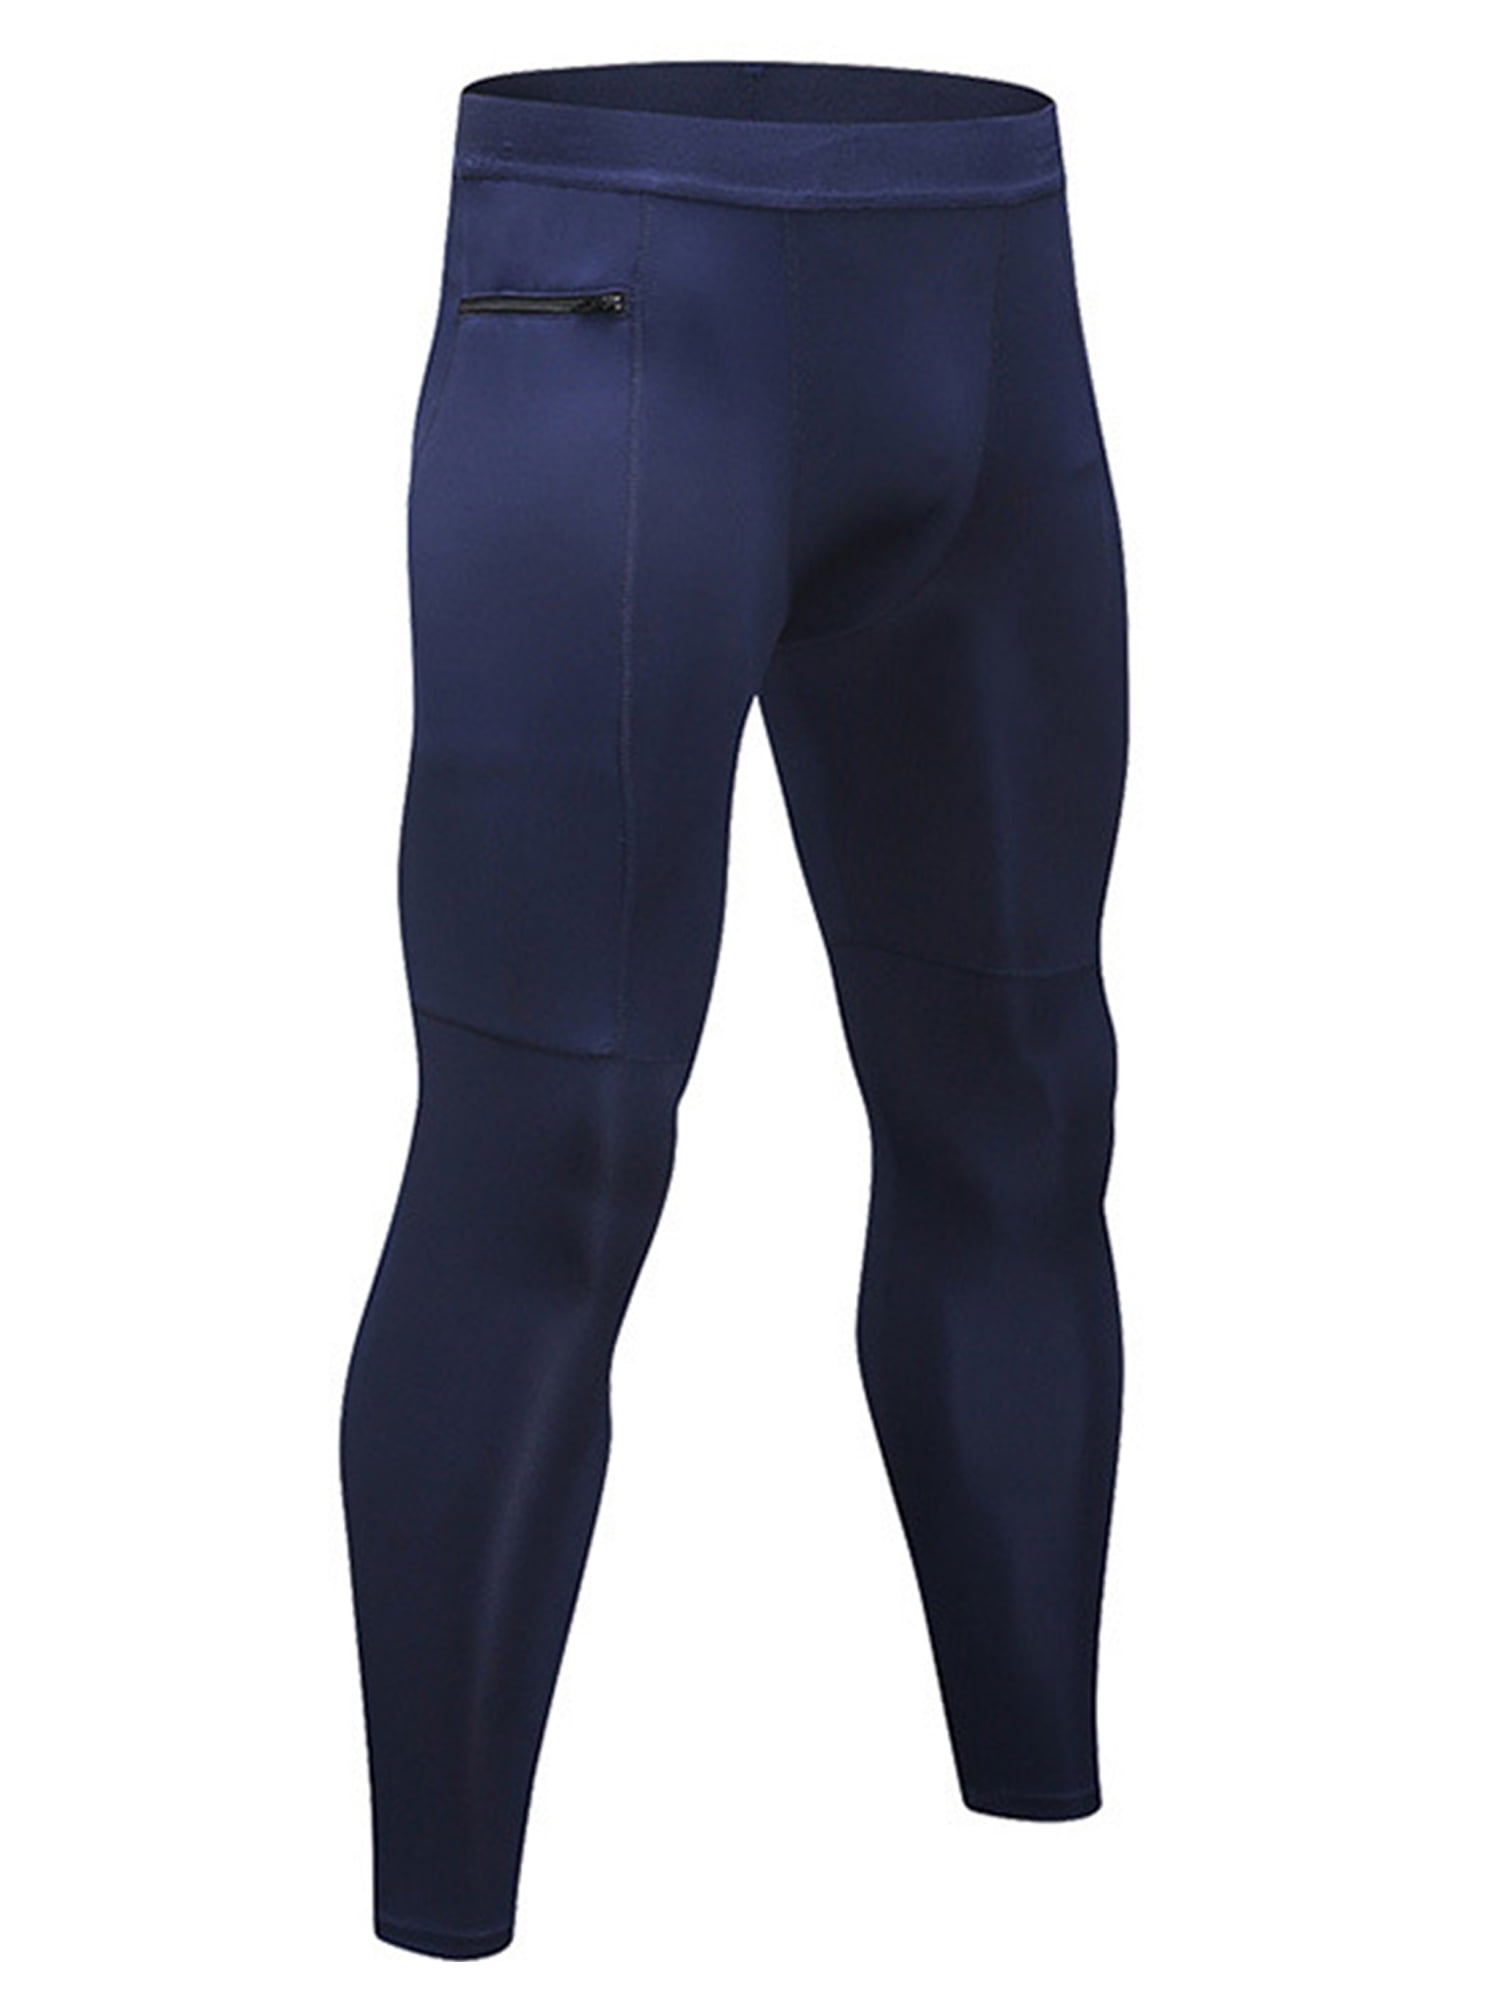 Mens high waisted compression leggings Puma LIGA BASELAYER LONG TIGHT blue